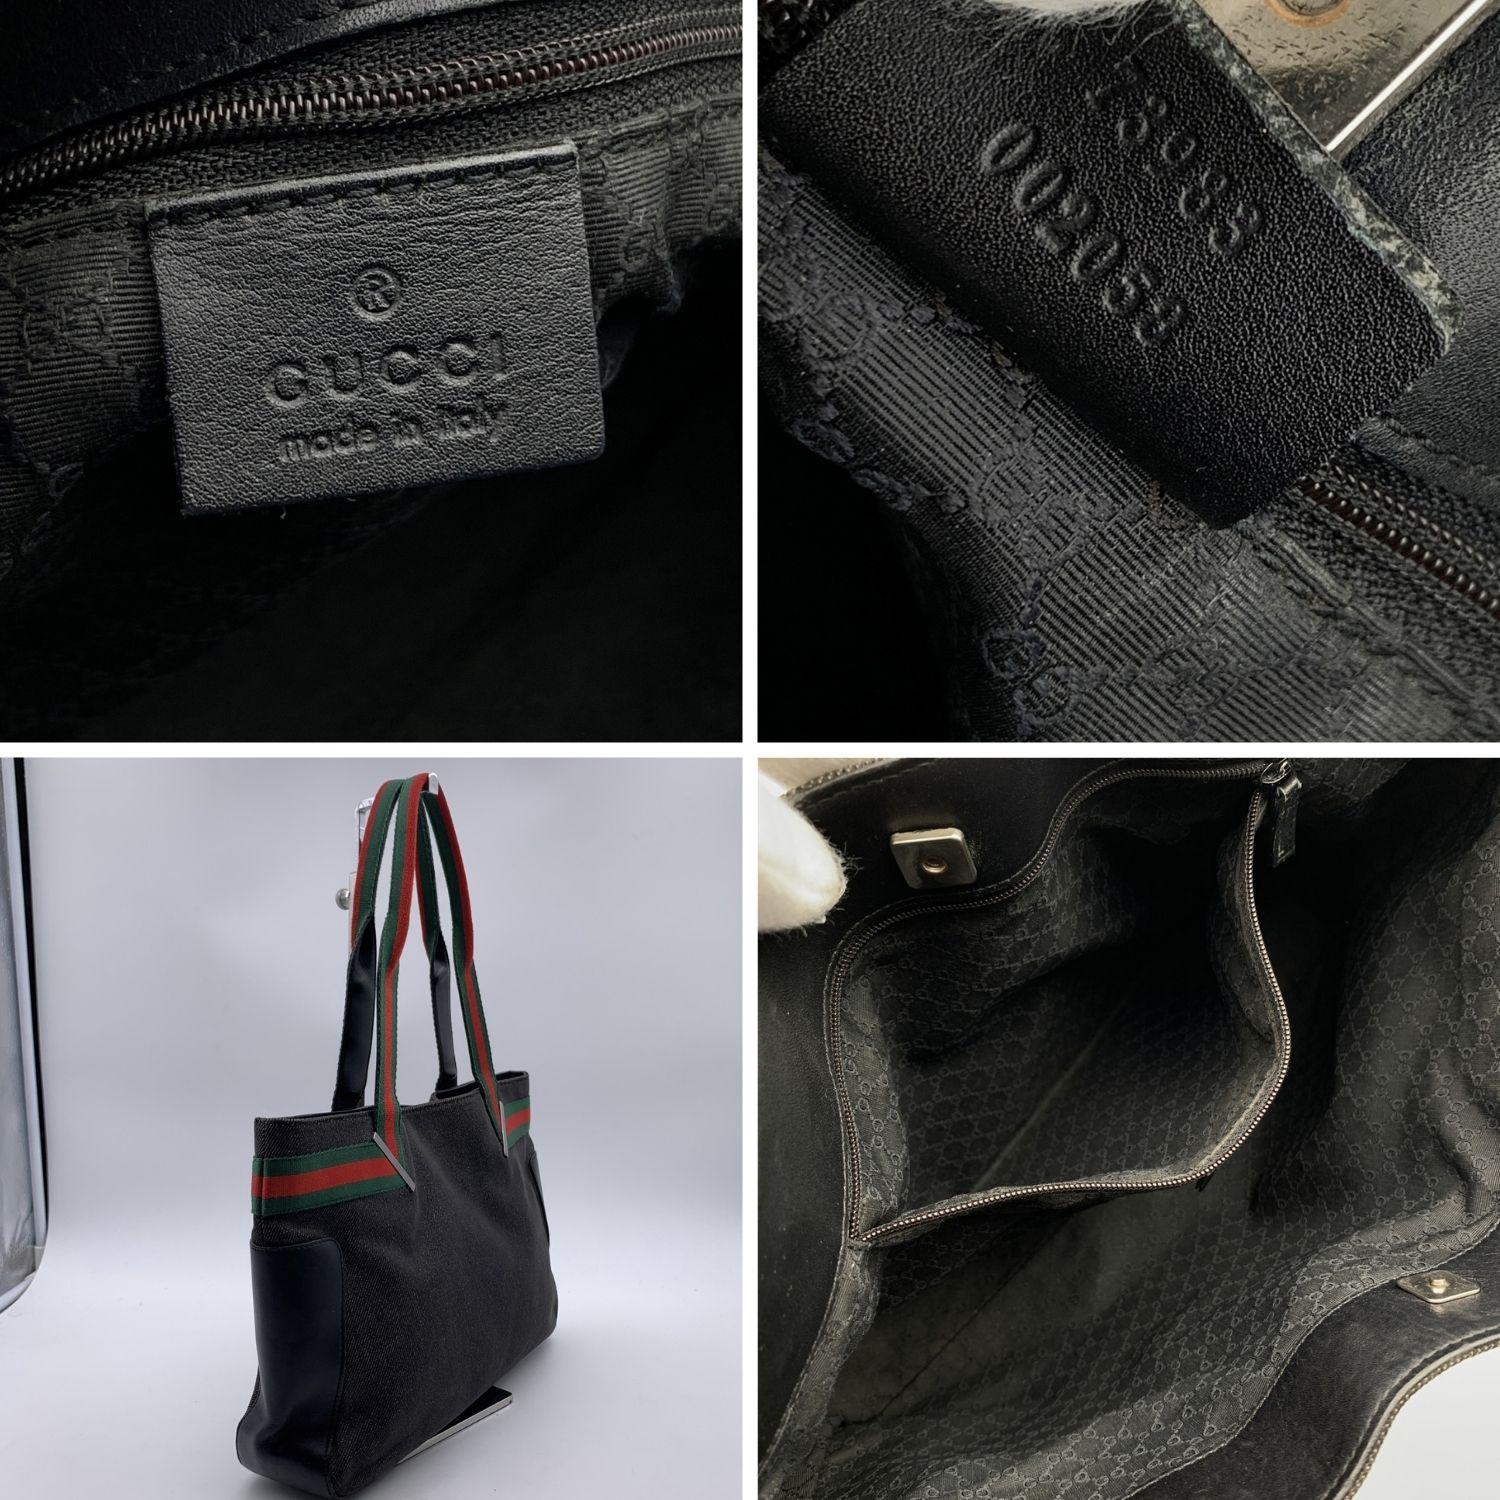 Gucci Black Denim Canvas Shopping Bag Tote Handbag with Stripes 2